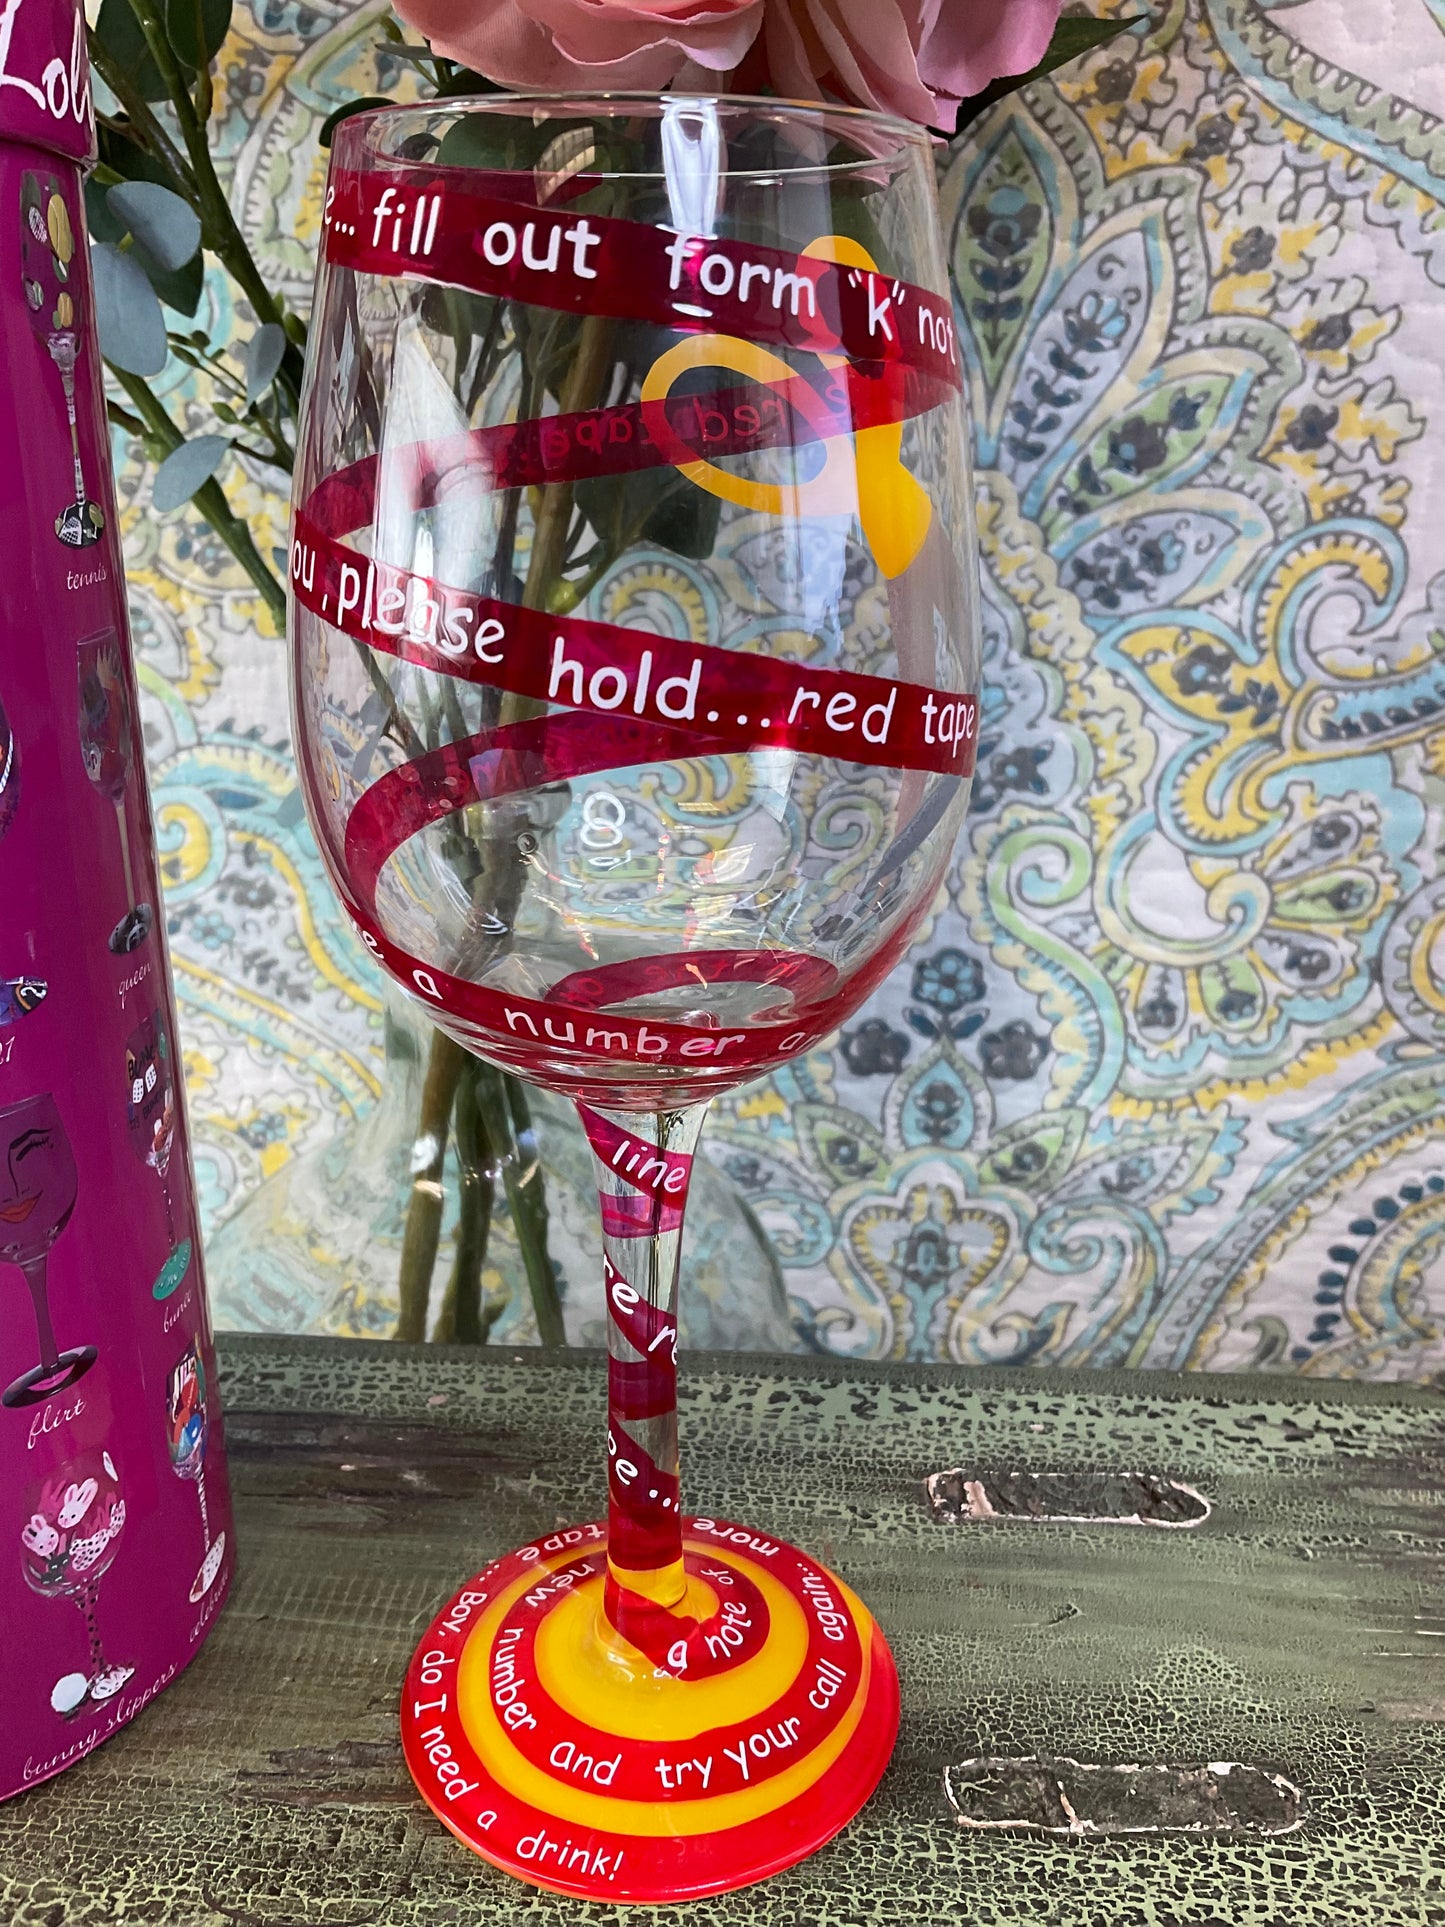 Lolita "Red Tape" Wine Glass, 15 oz